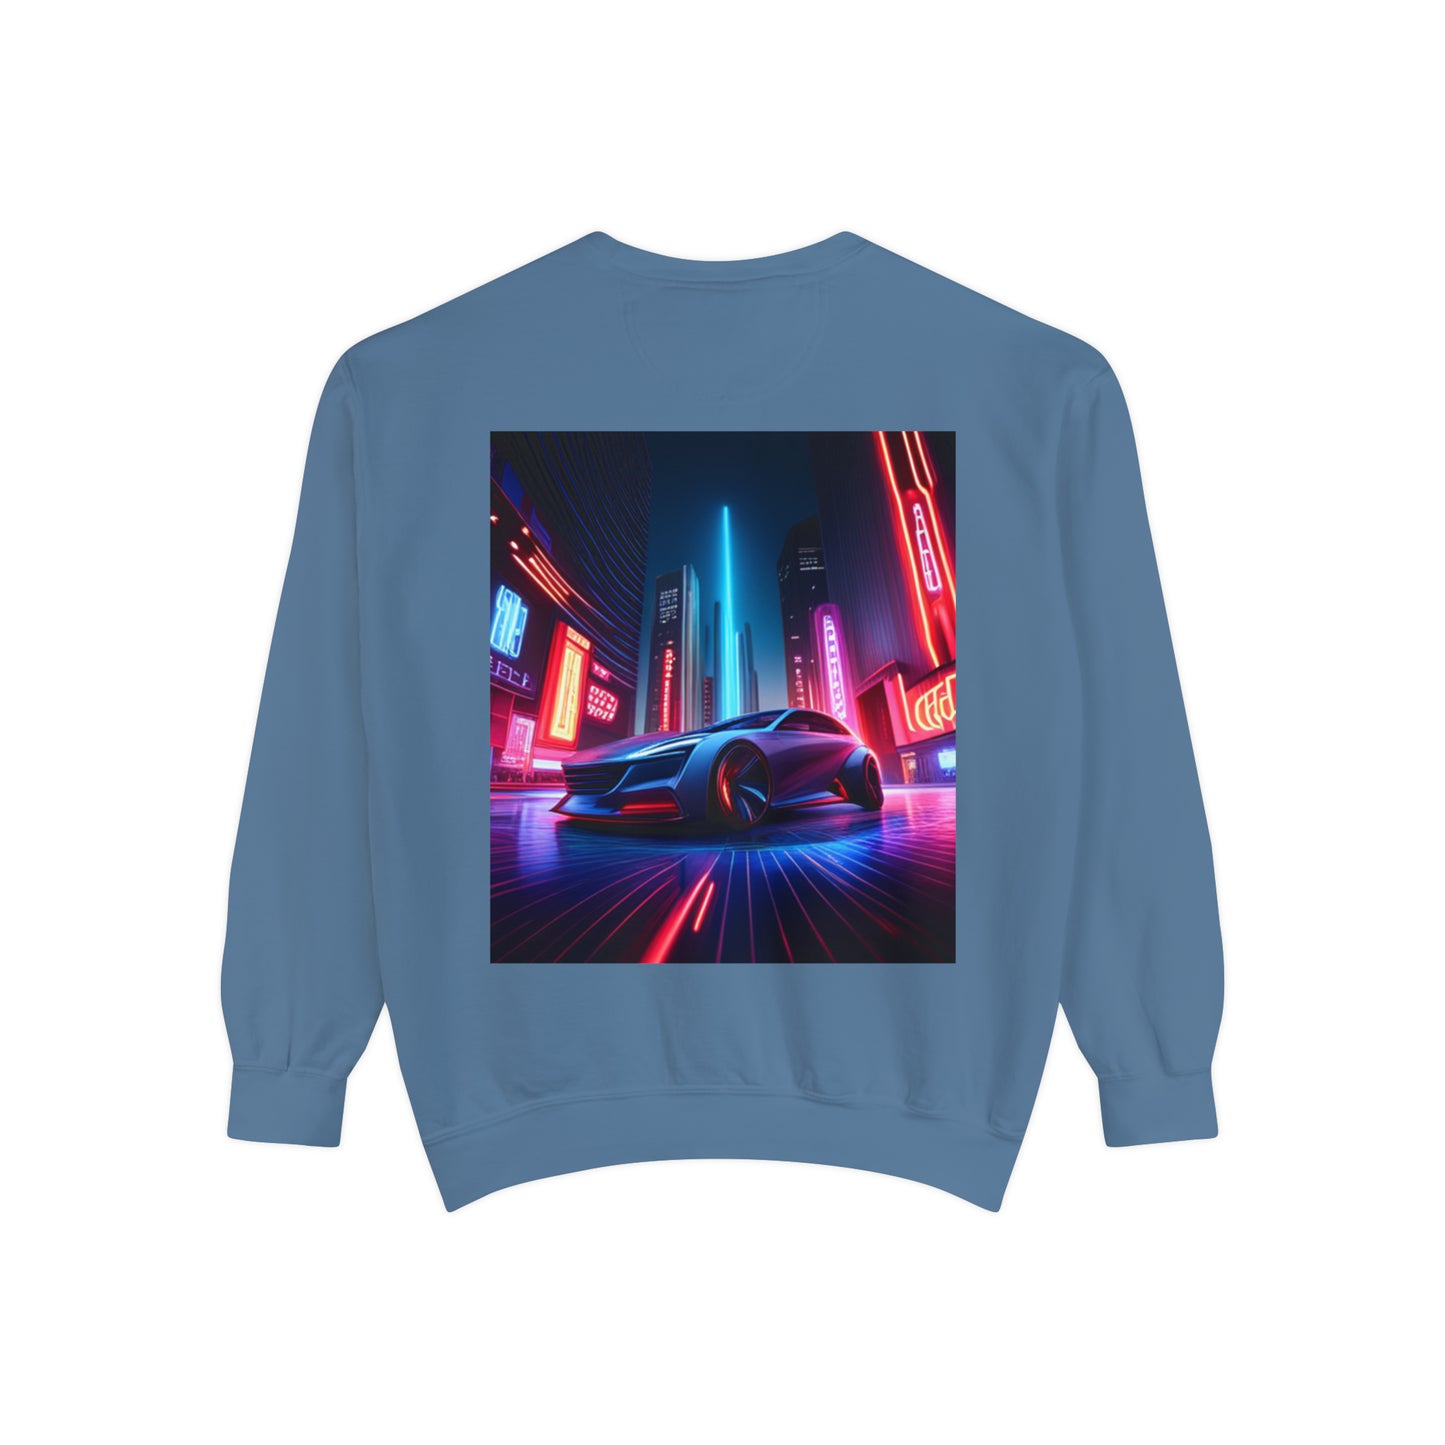 Copy of Unisex Garment-Dyed Sweatshirt